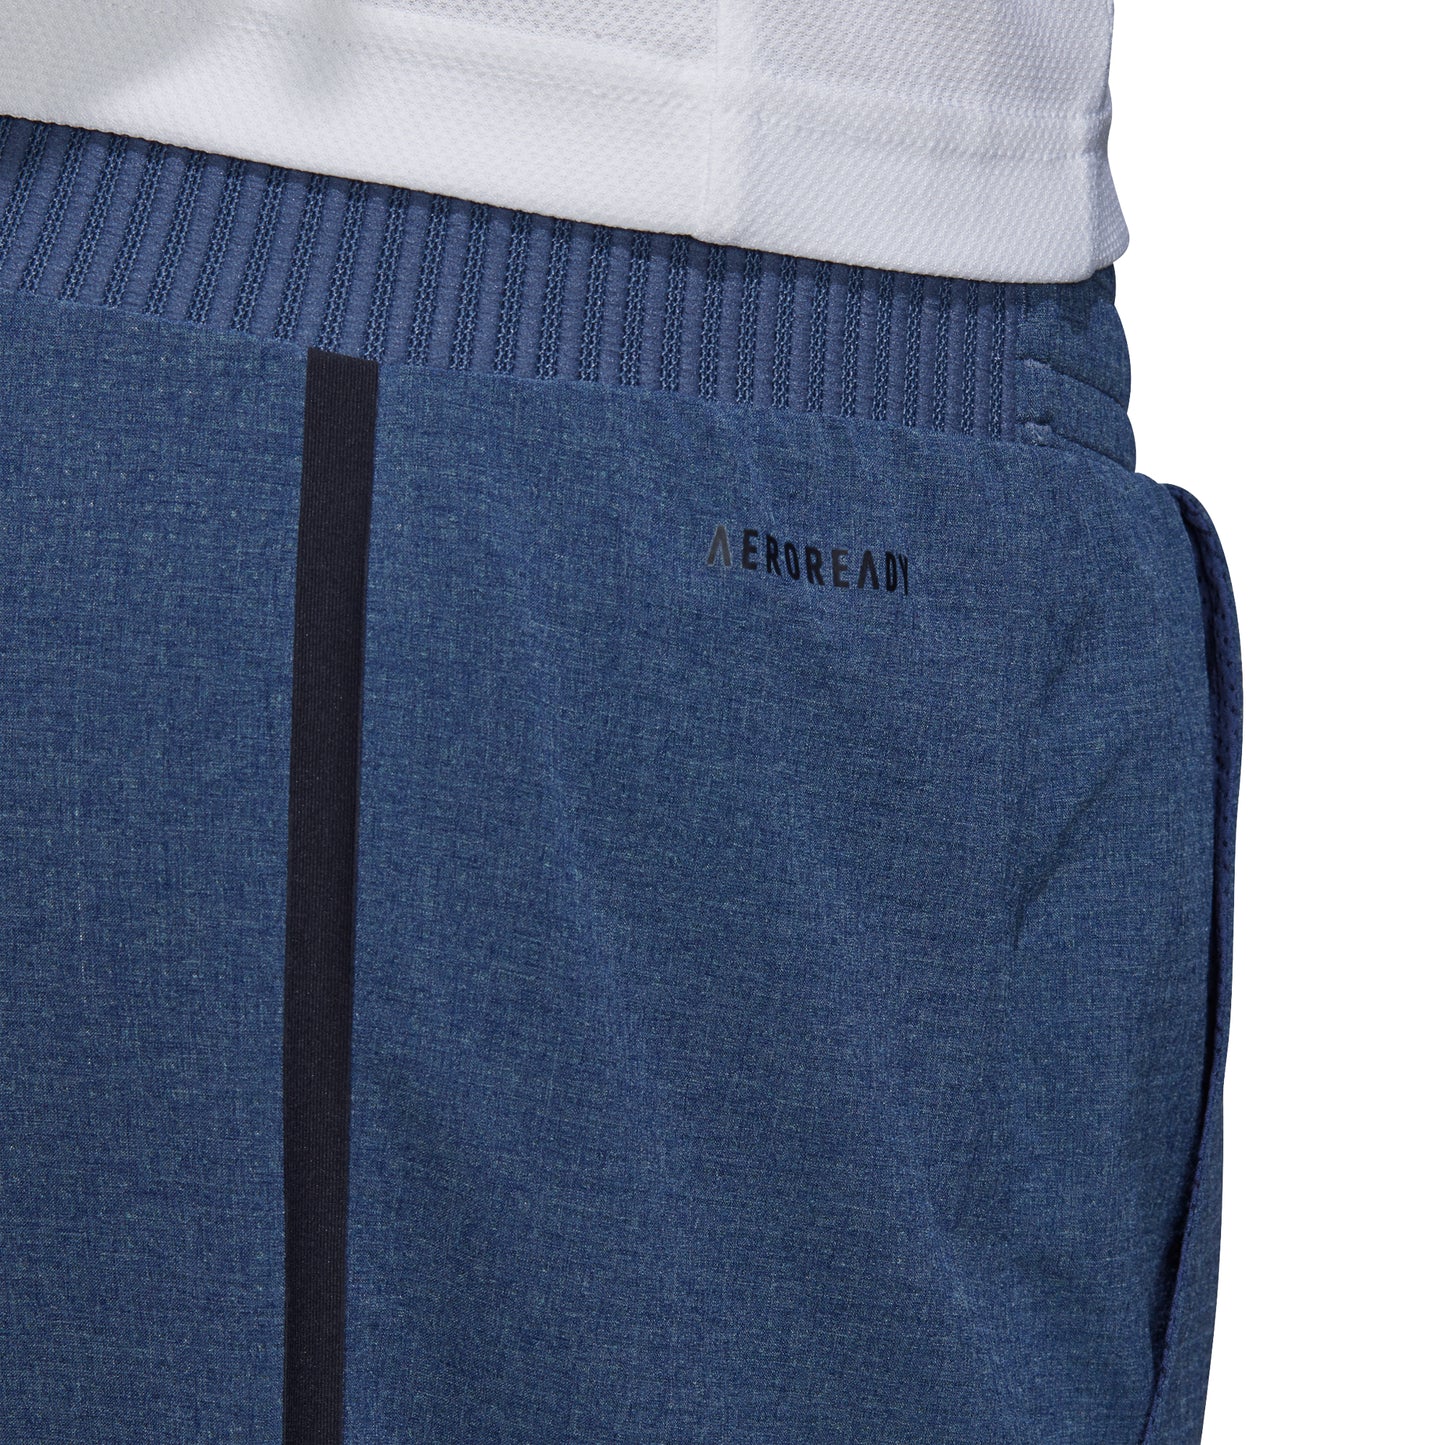 adidas Men's Shorts Ergo 9" - Tech Indigo FK0796